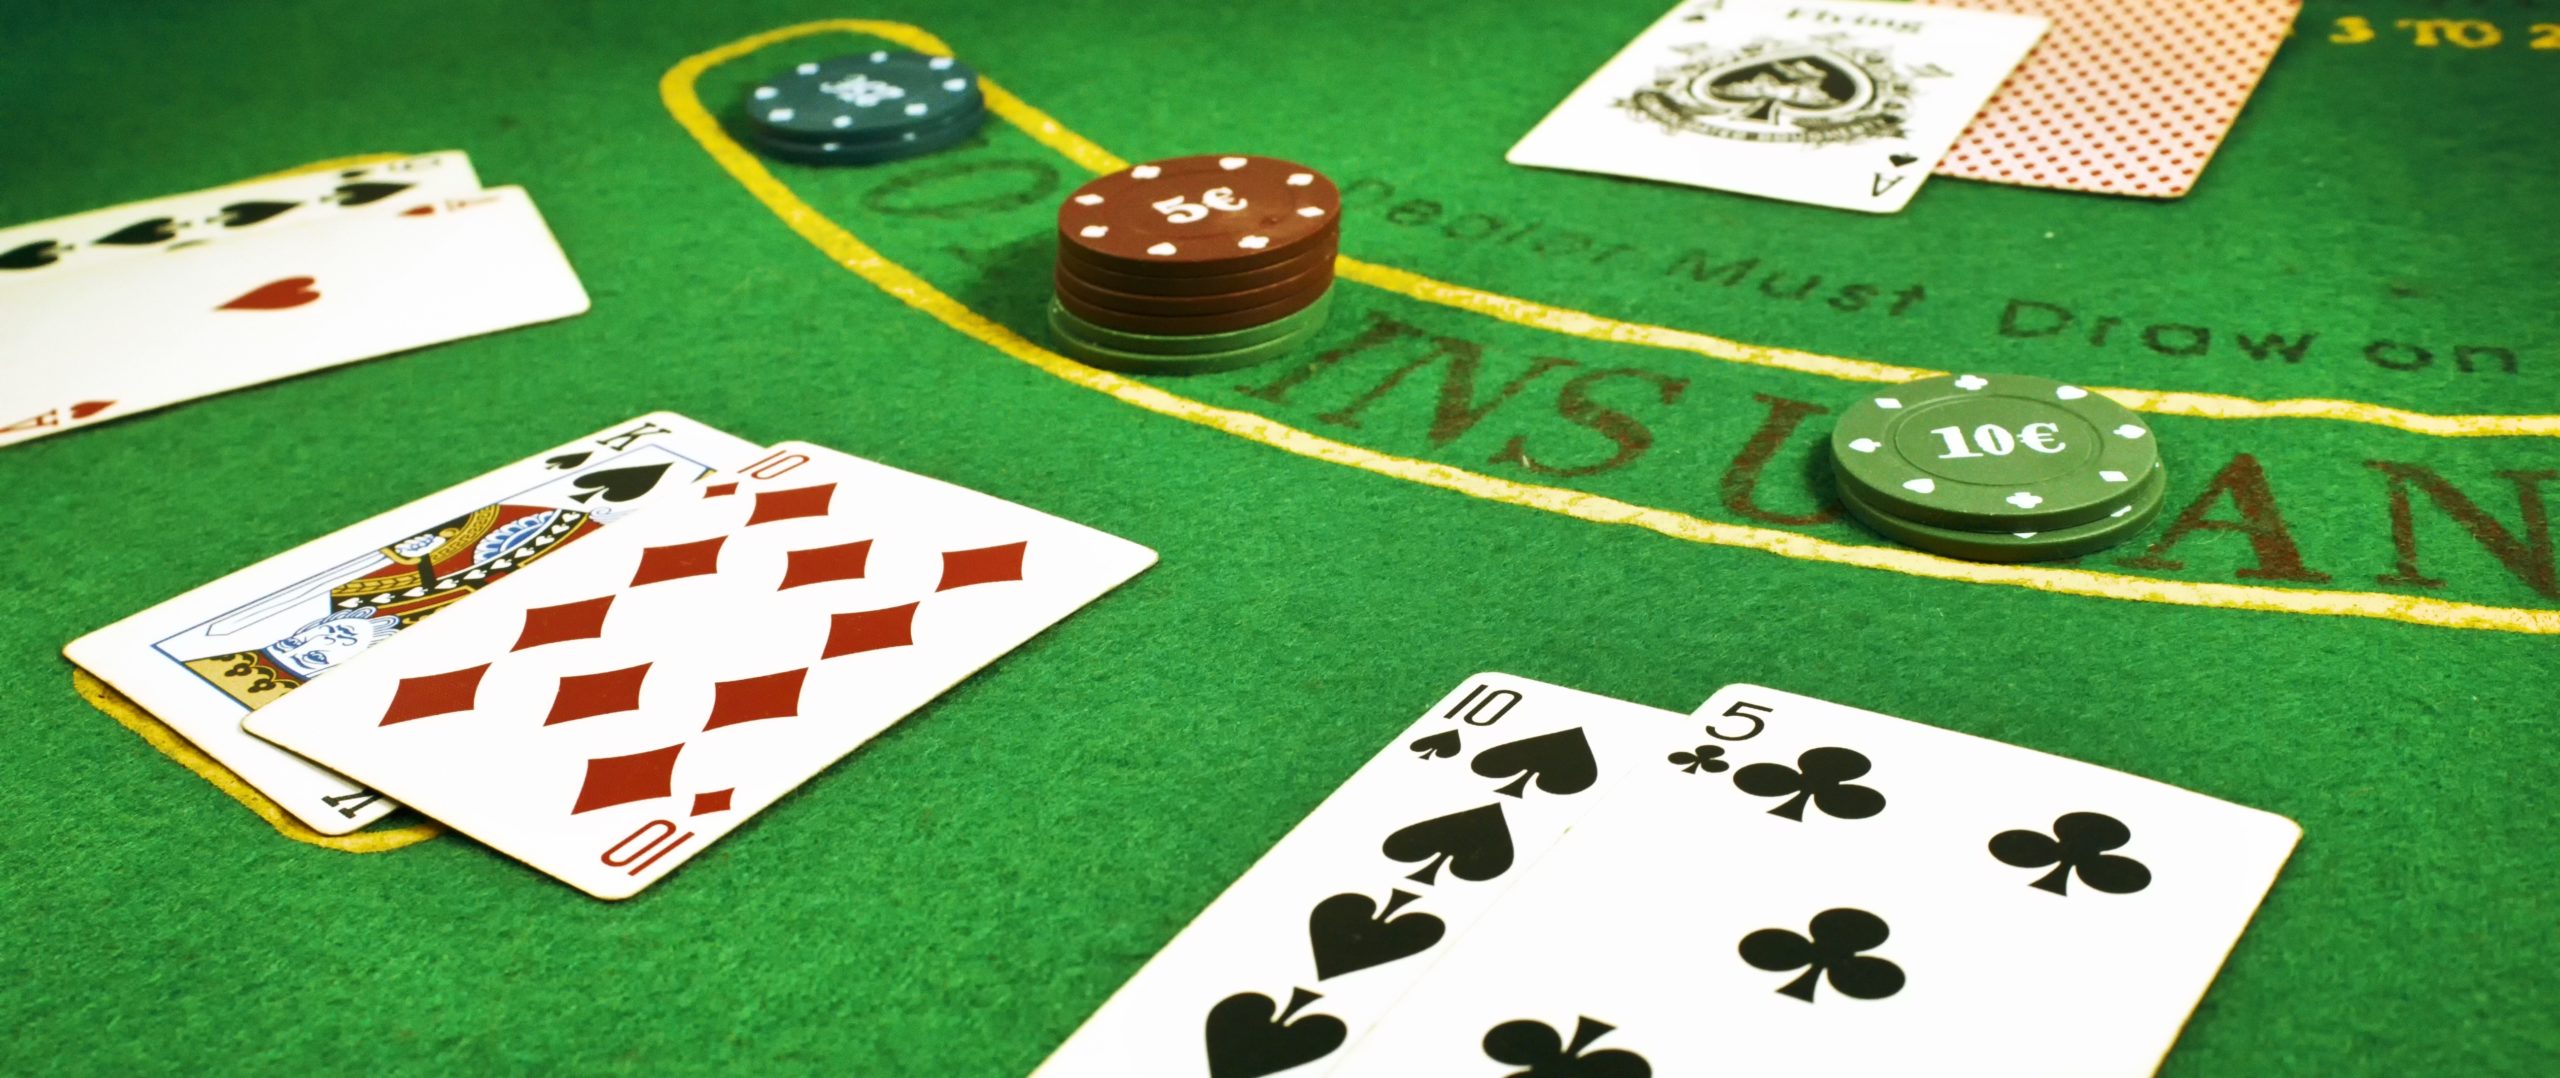 Learn the optimal blackjack strategy at Joe Fortune